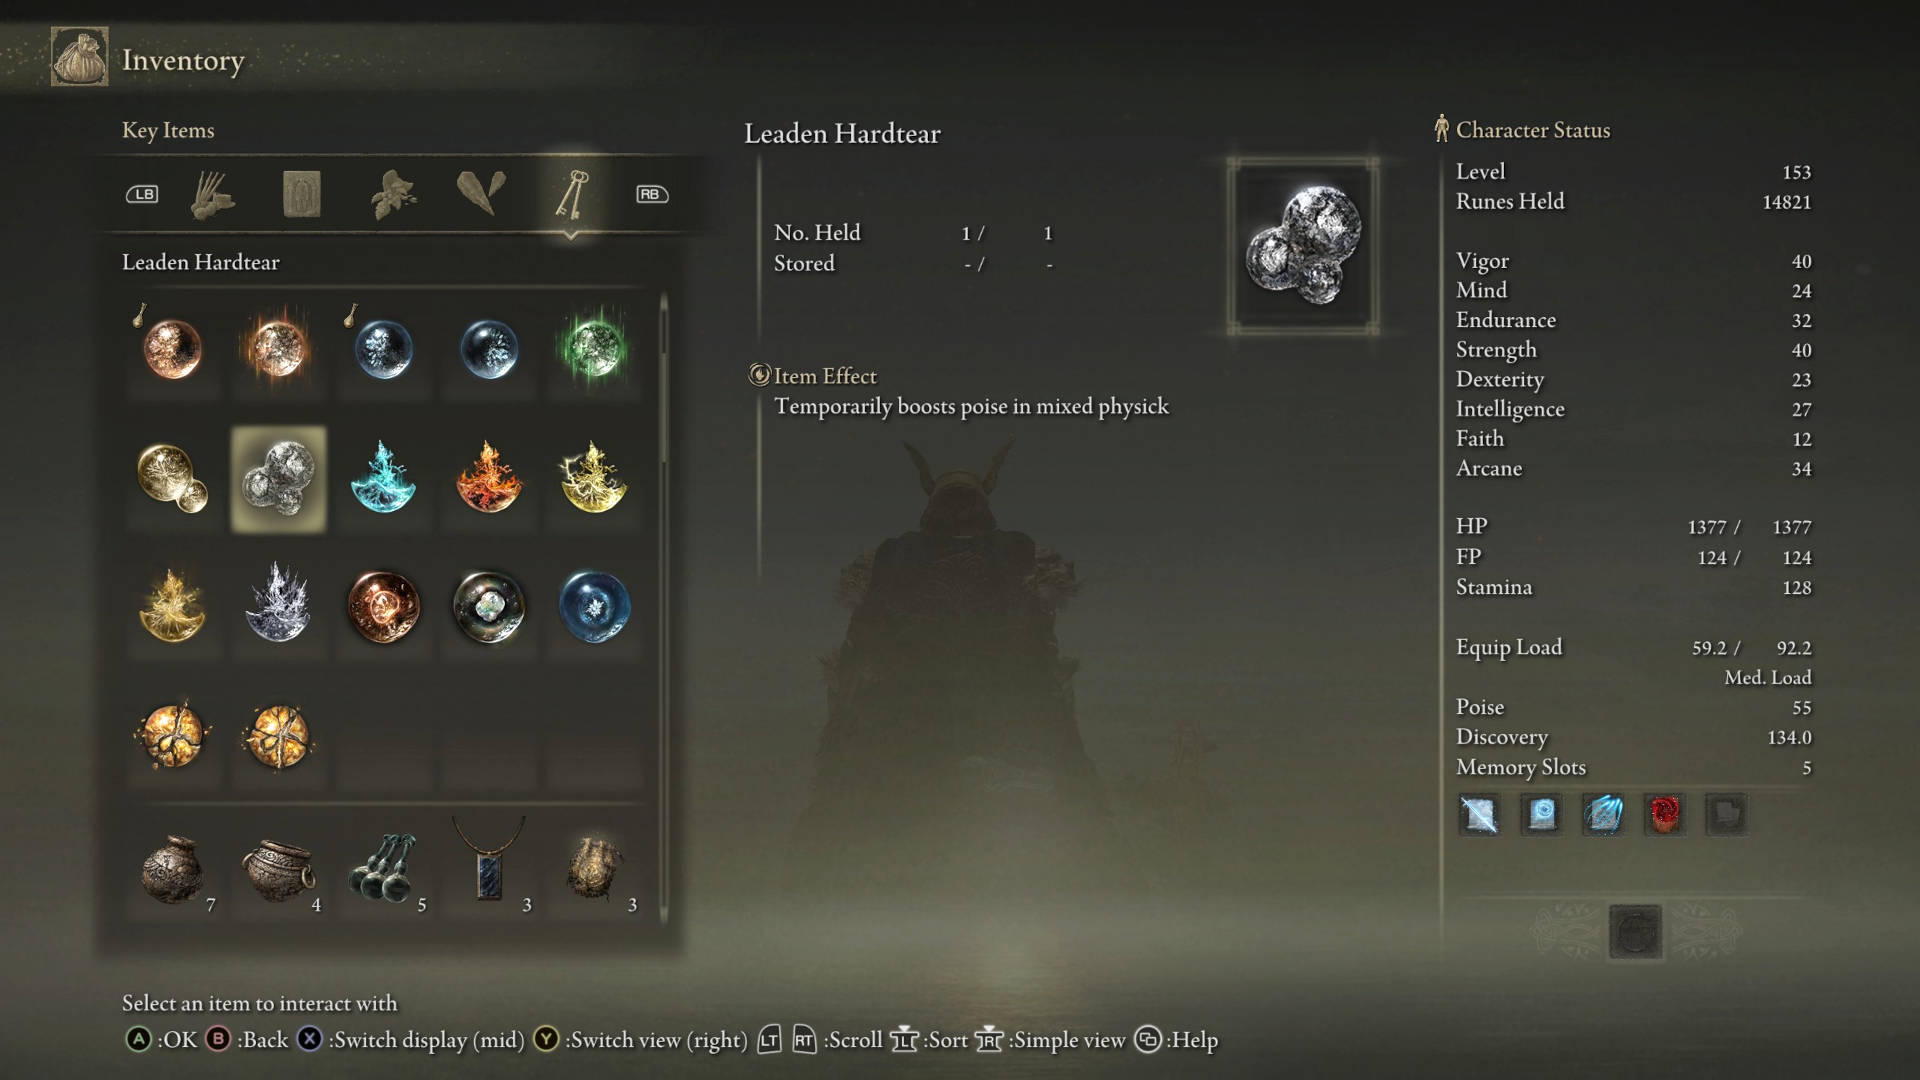 Elden Ring crystal tears: the Leaden Hardtear in the inventory menu.